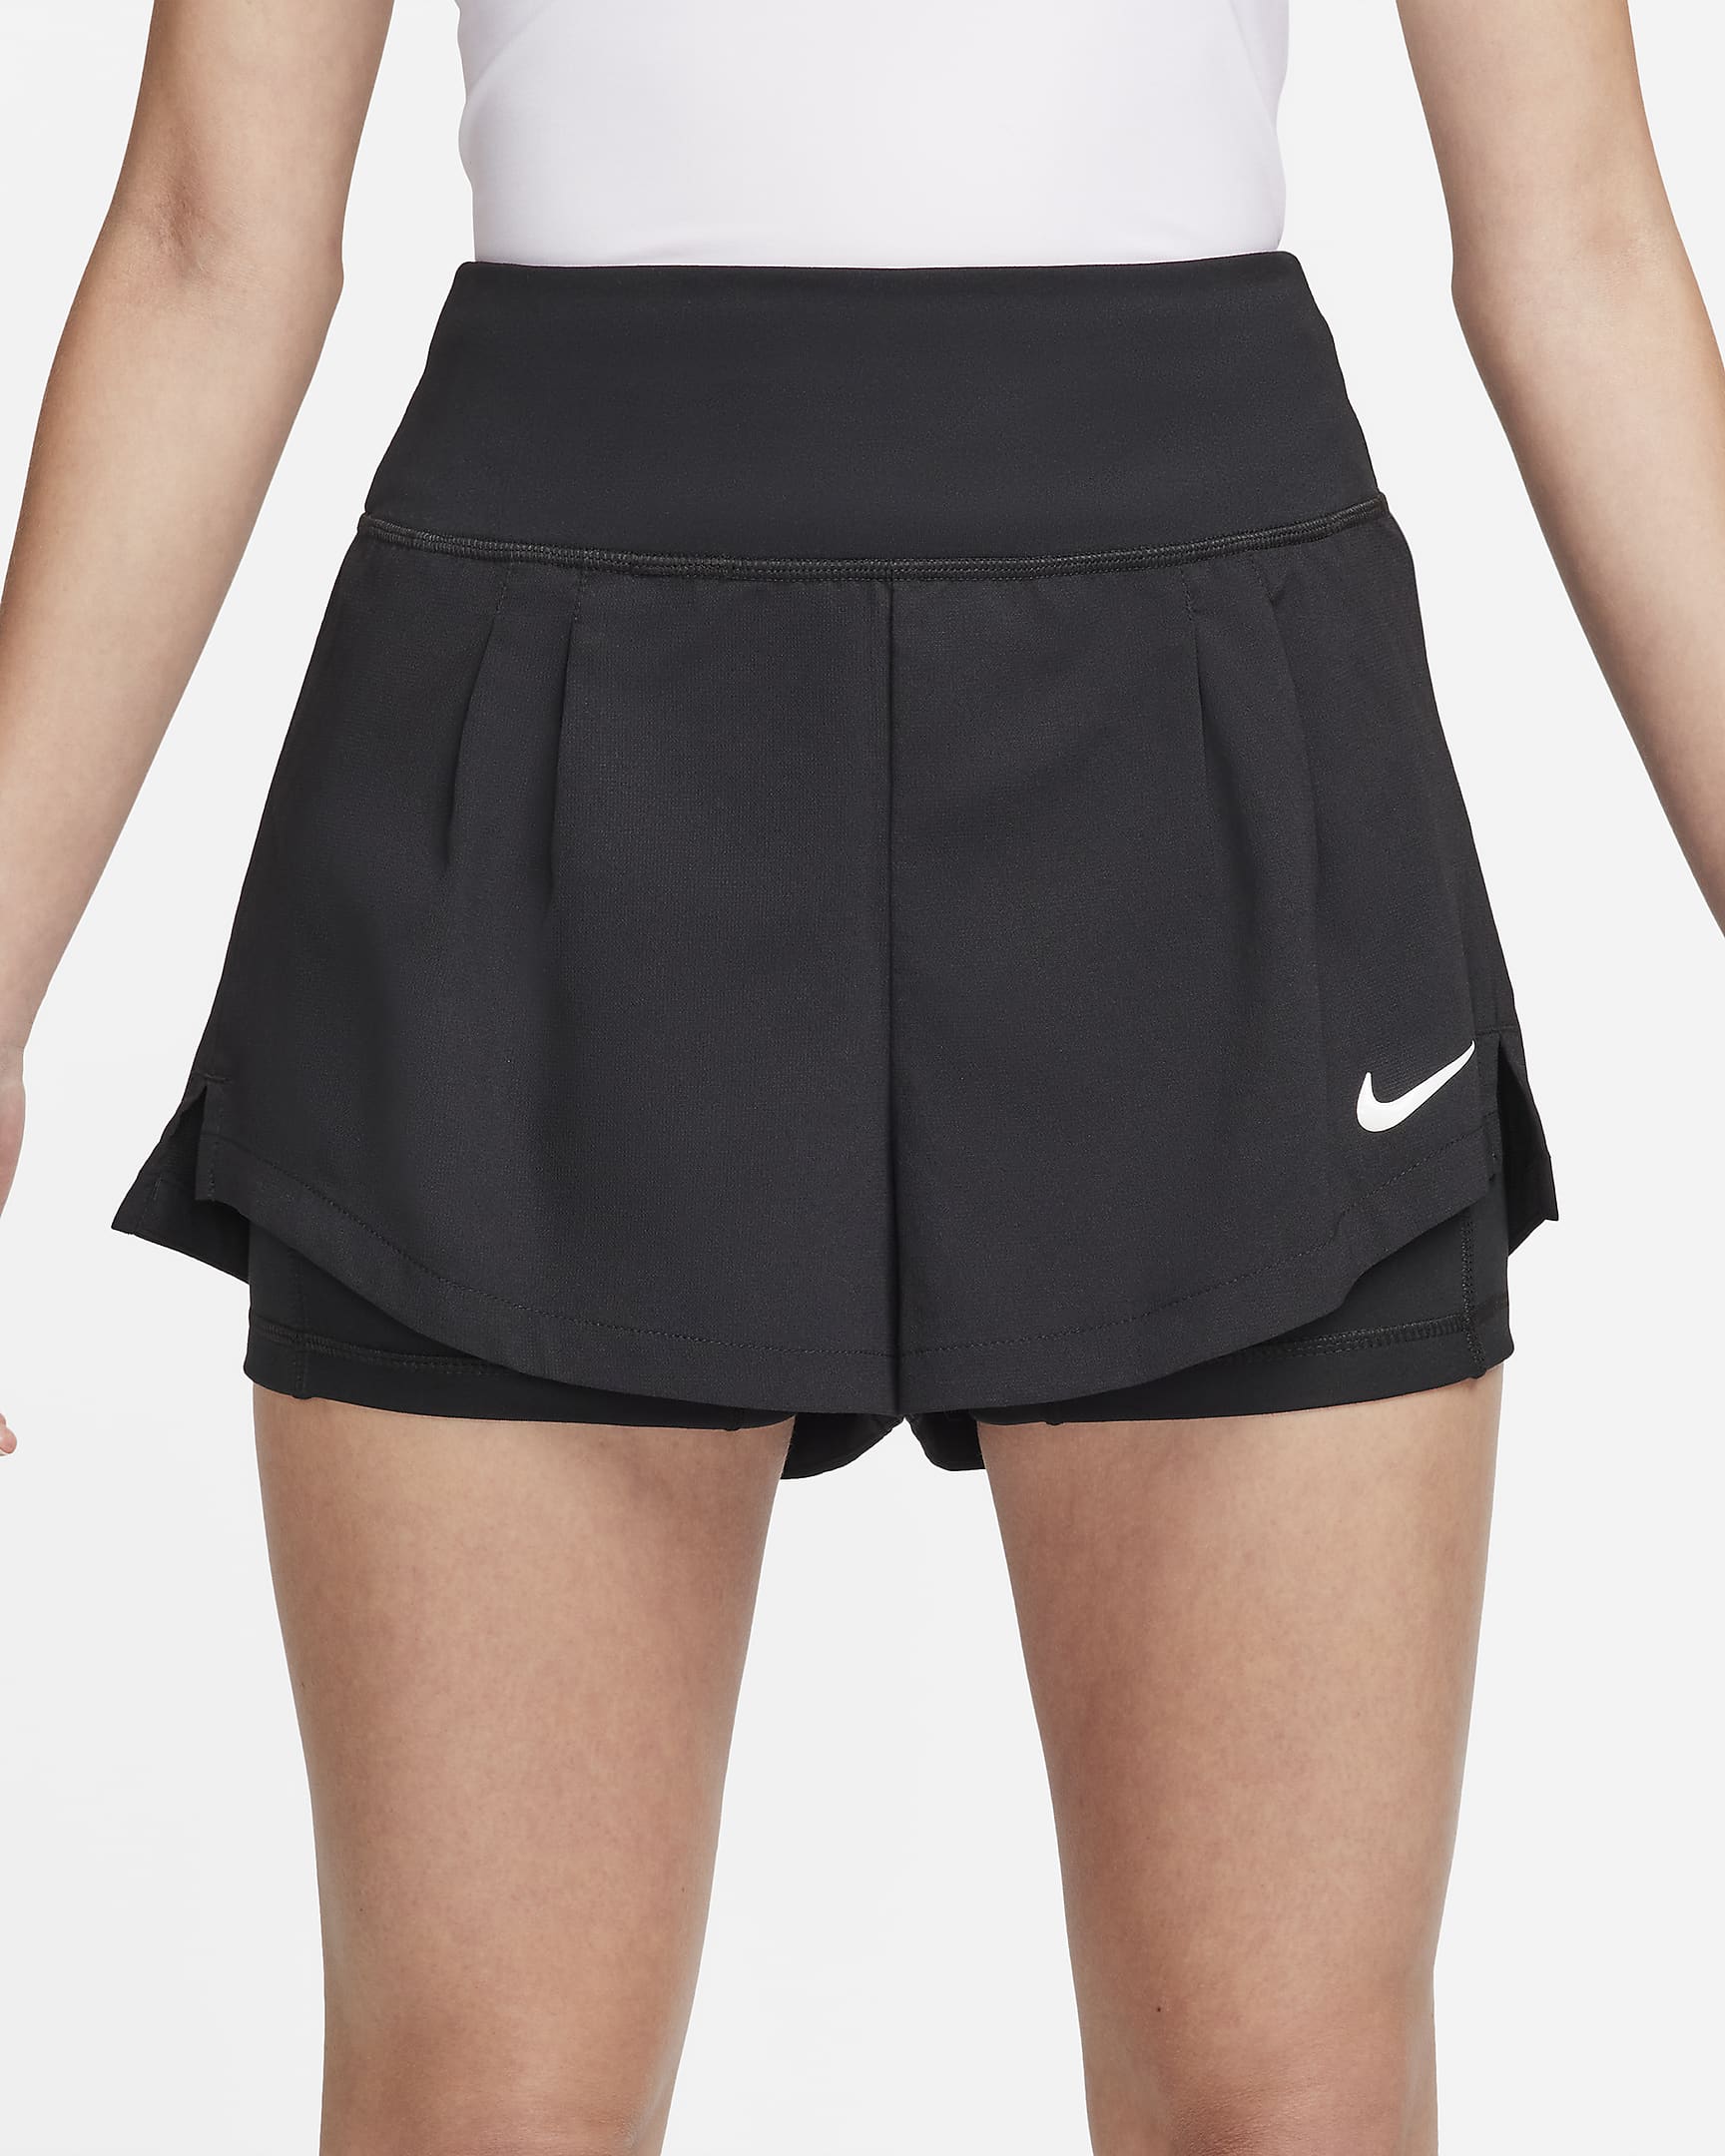 nikecourt advantage womens dri fit tennis shorts front from Nike